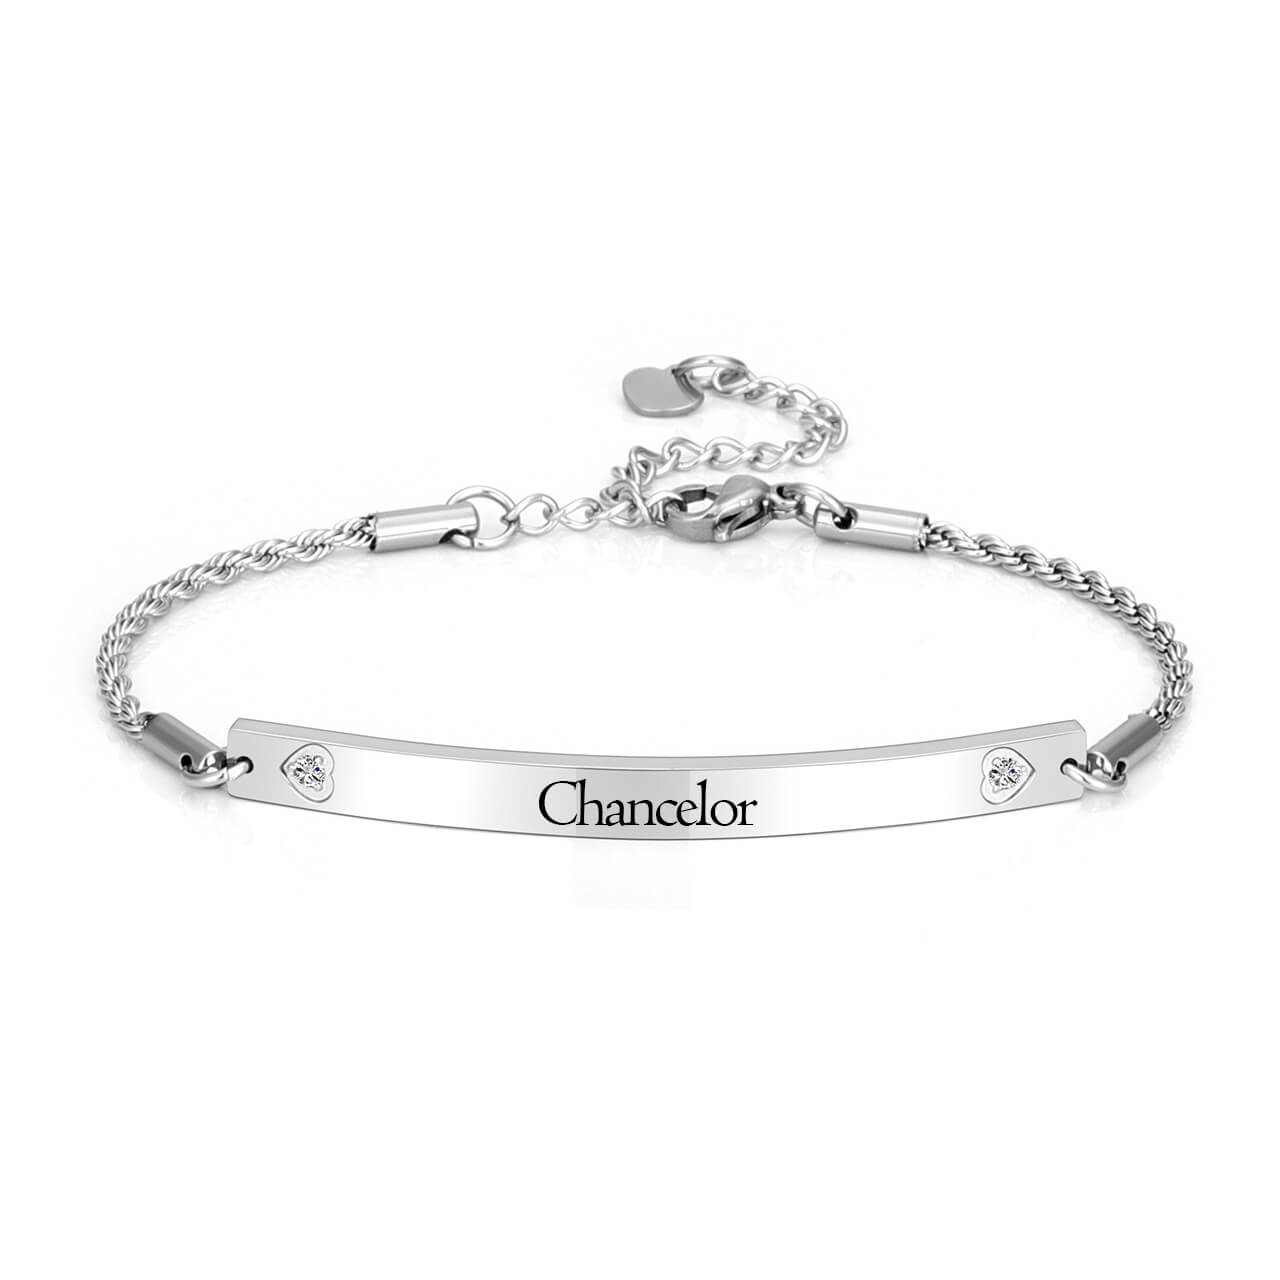 jovivi women's jewelry stainless steel personalize custom name bar bracelet, jbw047601